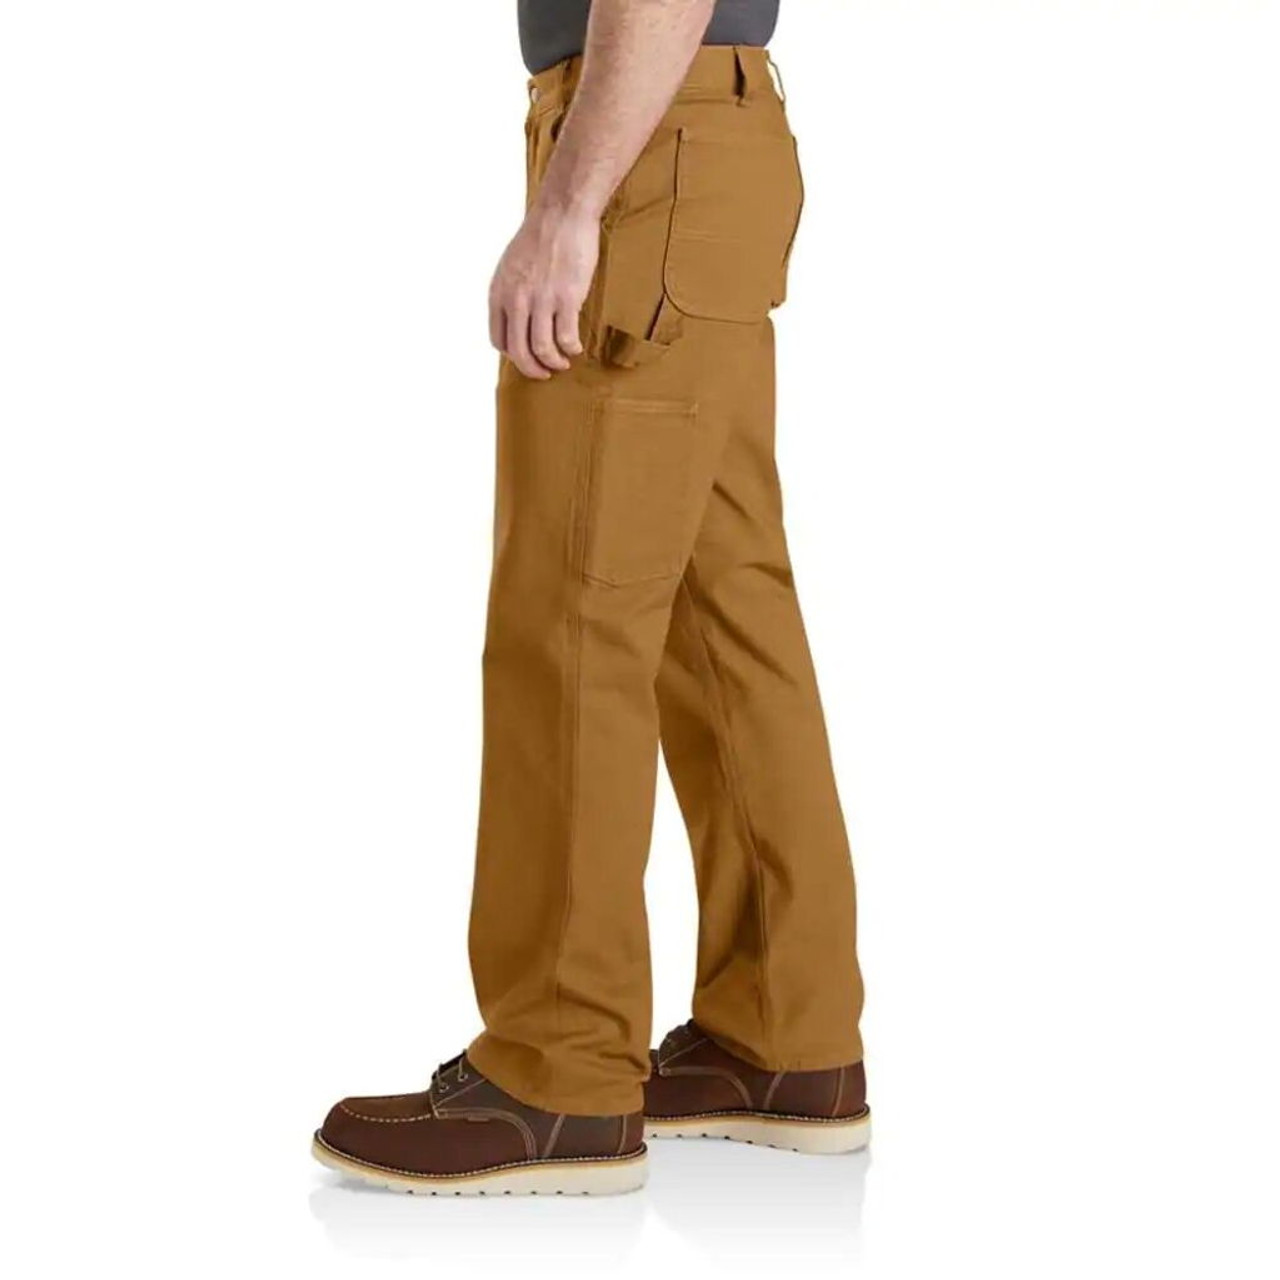 Carhartt Mens Carhartt Pants Relaxed Fit, Size 36x32